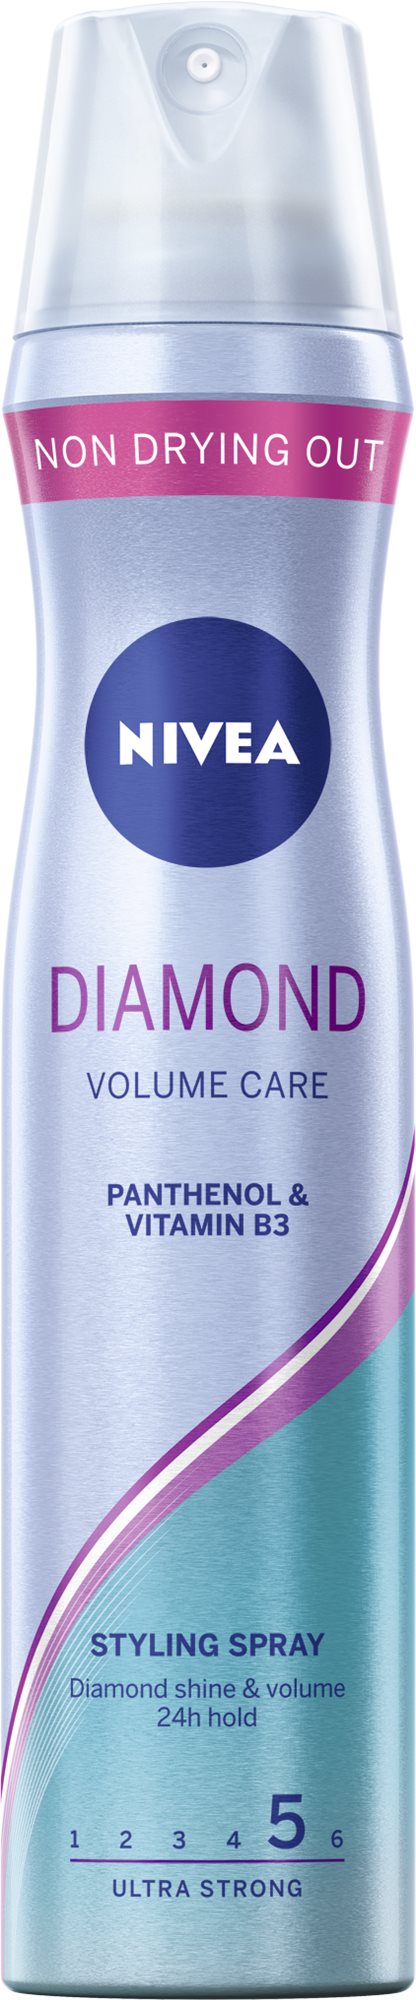 Hajlakk NIVEA Diamond Volume Care 250 ml